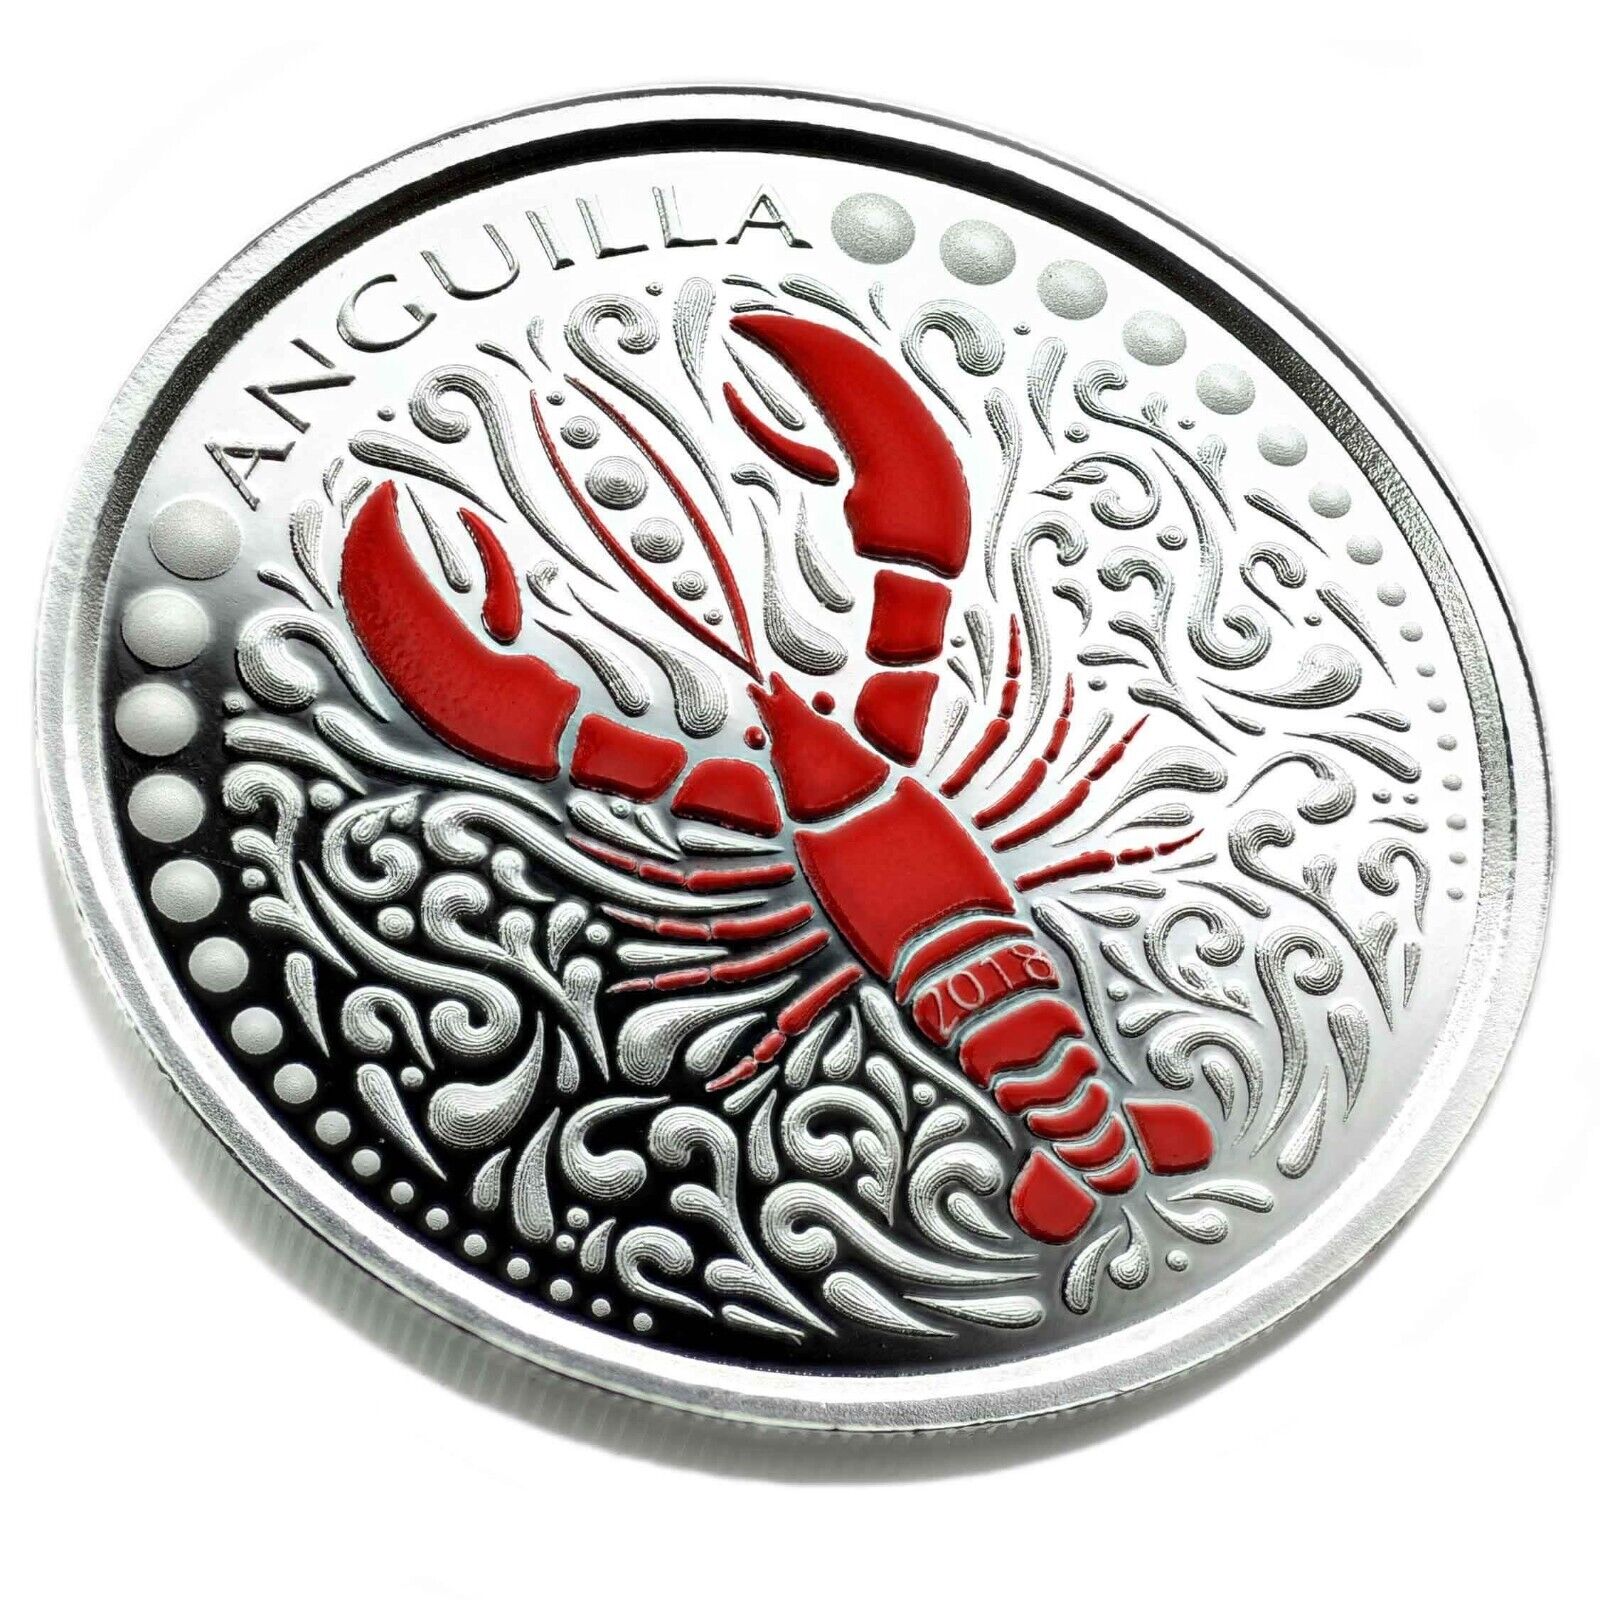 1 Oz Silver Coin 2018 EC8 Anguilla $2 Scottsdale Mint Color Proof - Lobster-classypw.com-1